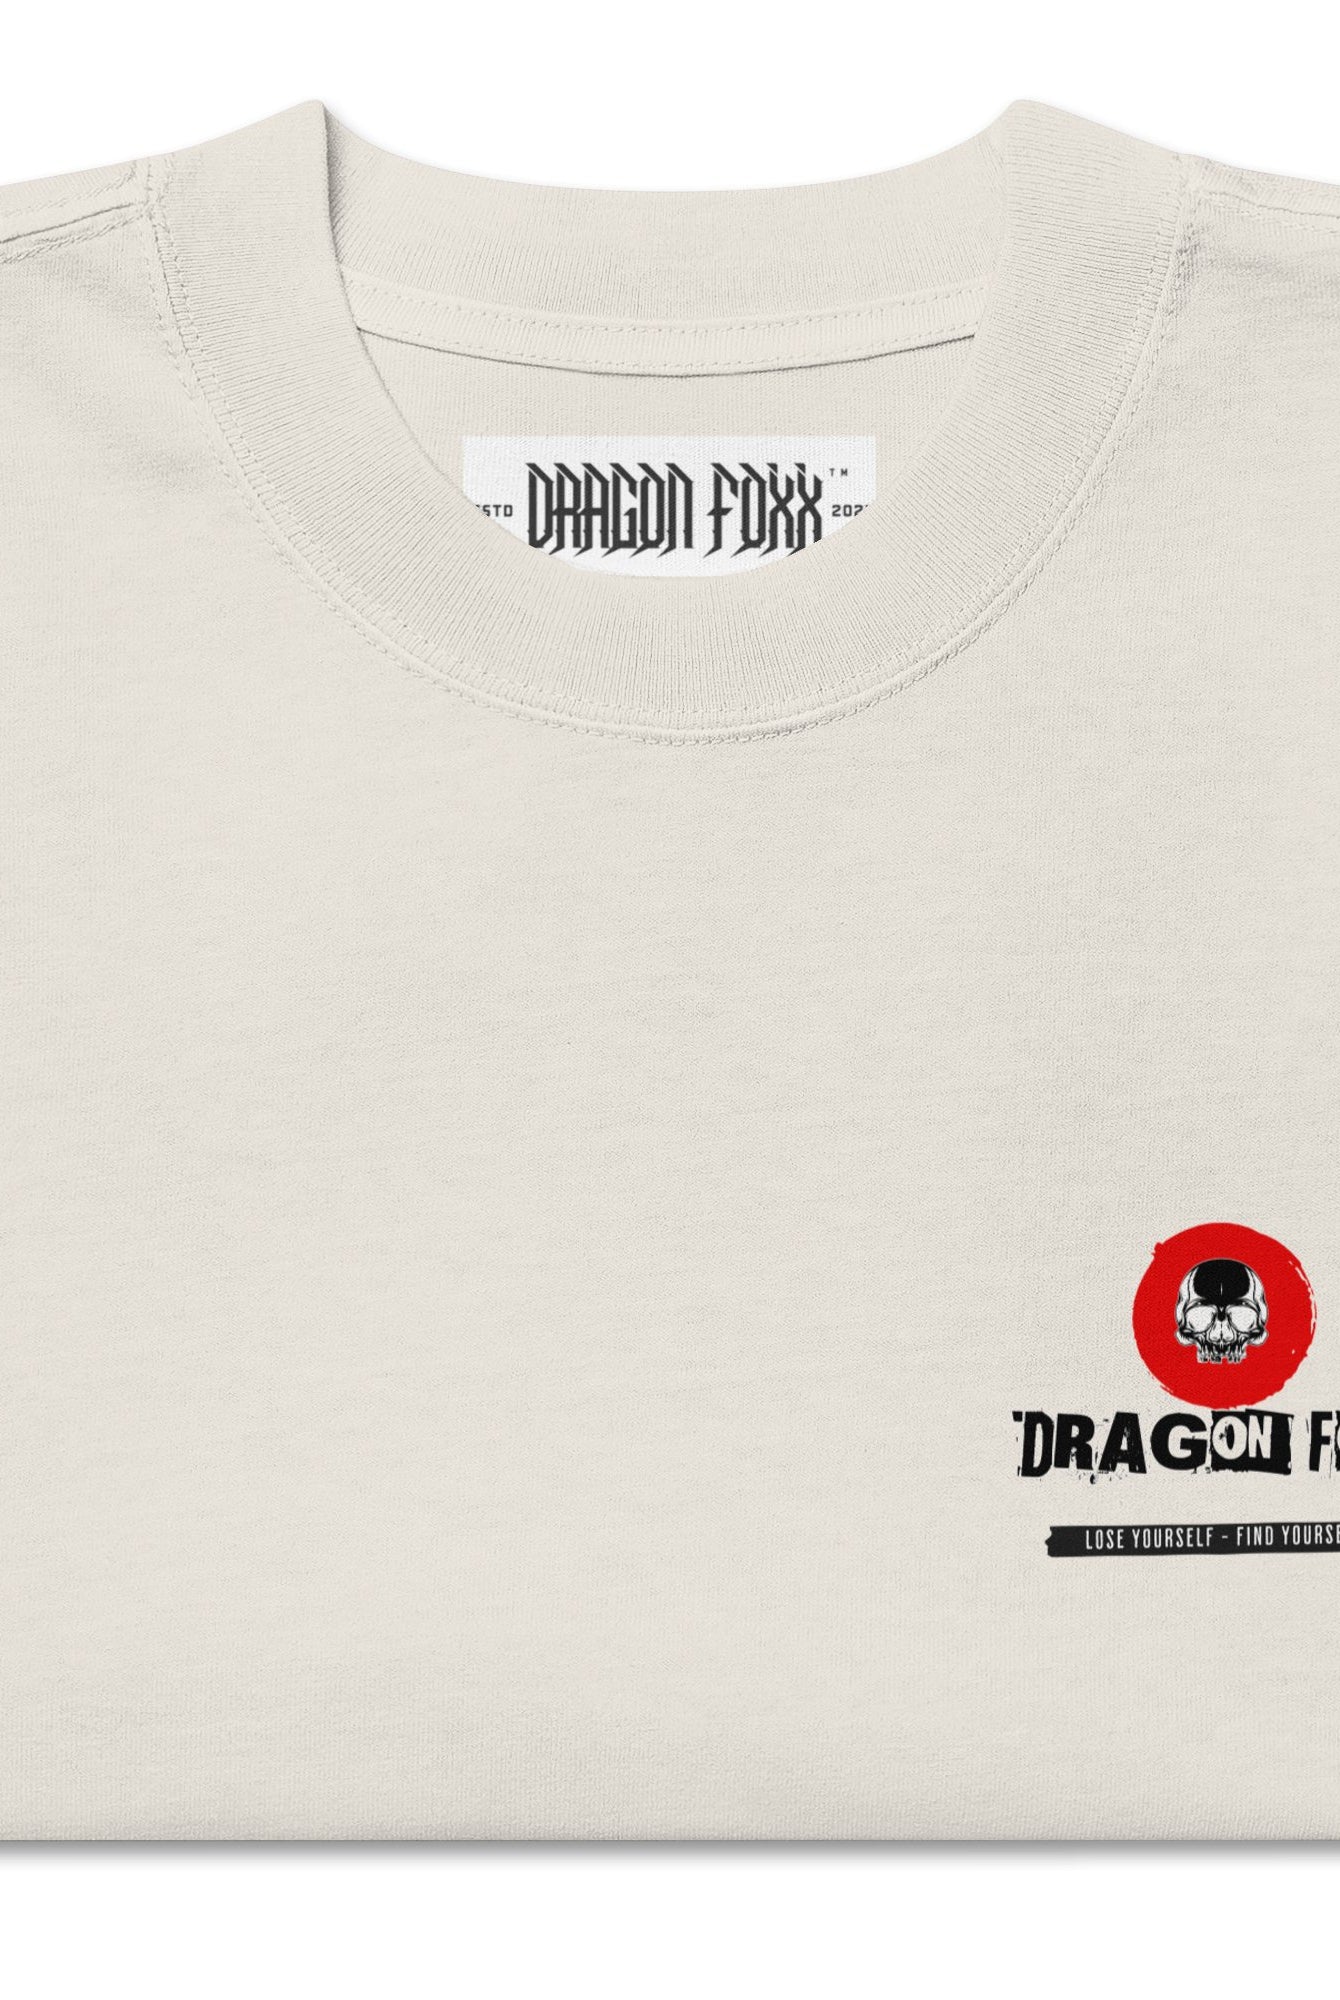 Dragon Foxx™ - Eclipse Isle - Men's Bone Oversized Faded T-Shirt - Men's T-Shirts - DRAGON FOXX™ - Dragon Foxx™ - Eclipse Isle - Men's Bone Oversized Faded T-Shirt - 7344420_17570 - S - Faded Bone - Dragon Foxx™ - Dragon Foxx™ - Eclipse Isle - Men's Bone Oversized faded T-Shirt - Dragon Foxx™ - Eclipse Isle - Men's Oversized faded T-Shirt